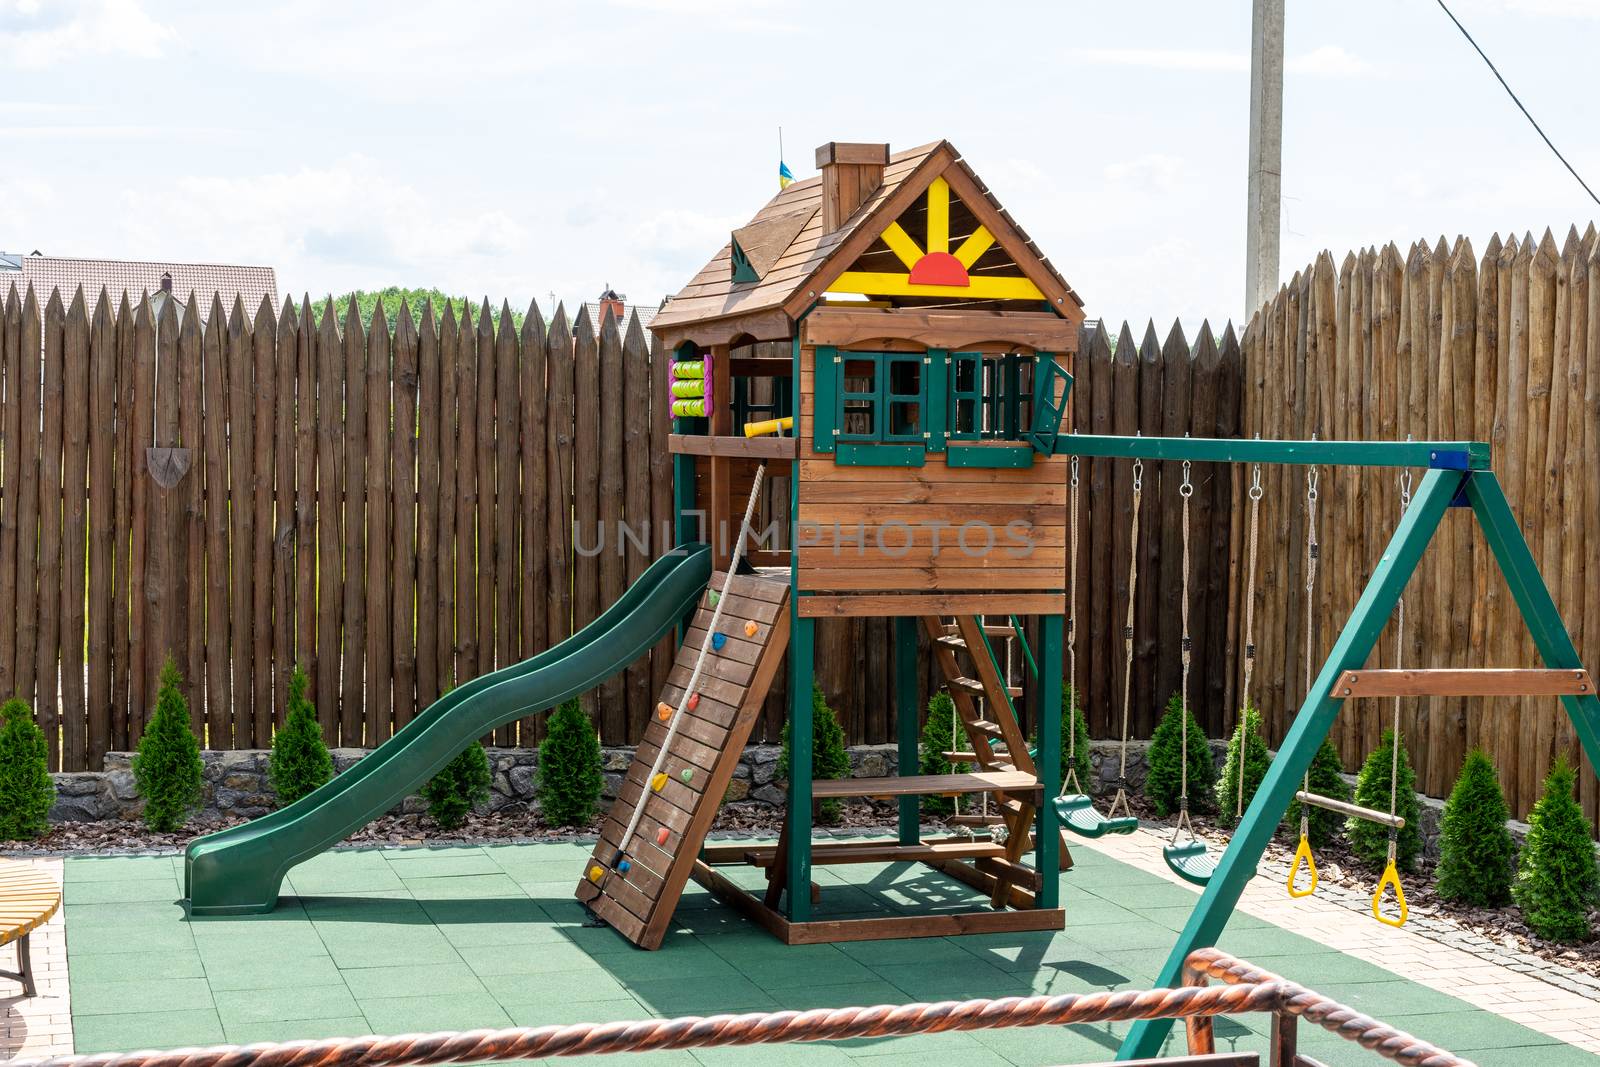 Wooden house on the playground. A small playground. Children's wooden house. Children's swing by Serhii_Voroshchuk